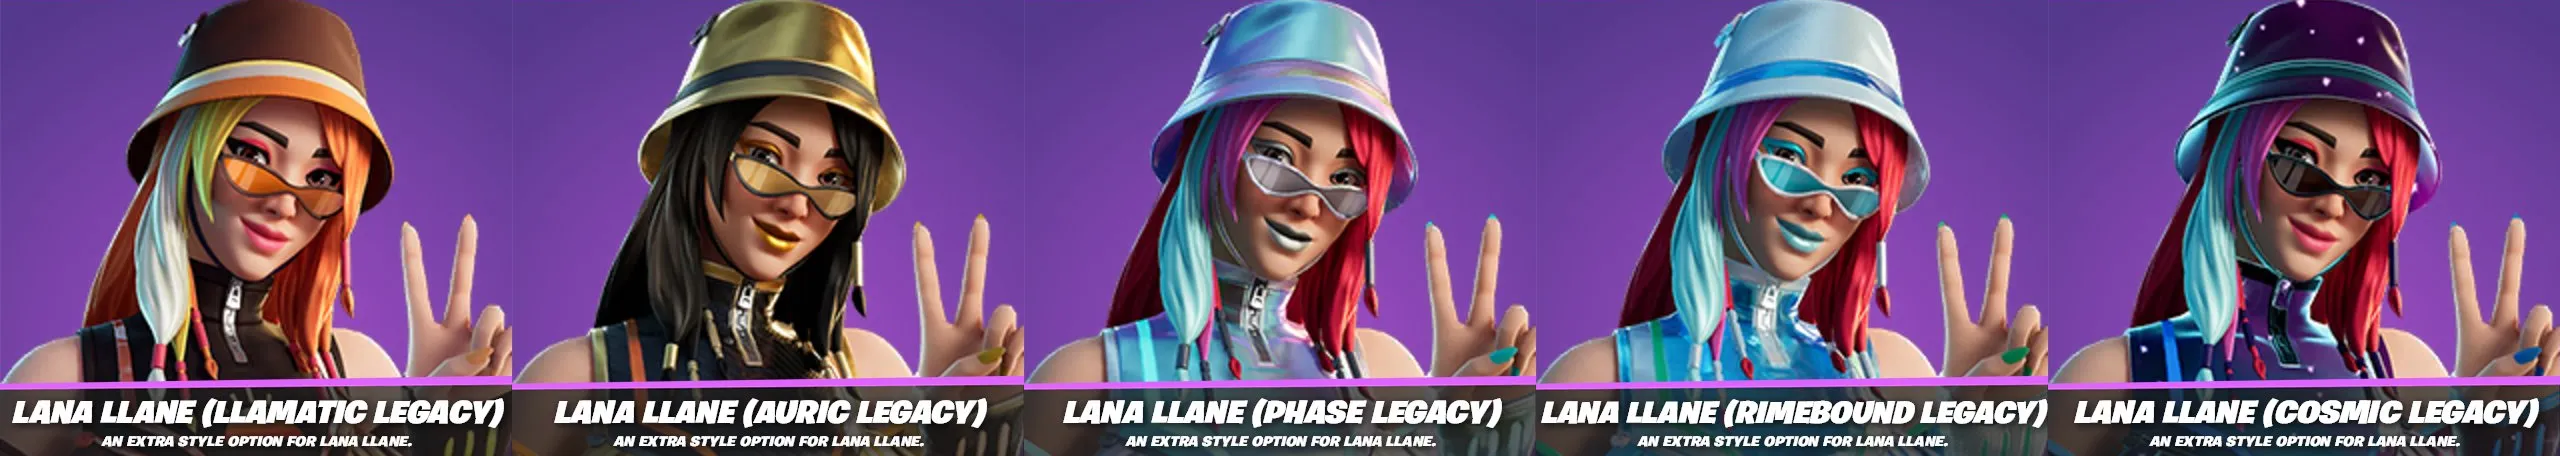 Llana Lane Legacy Styles